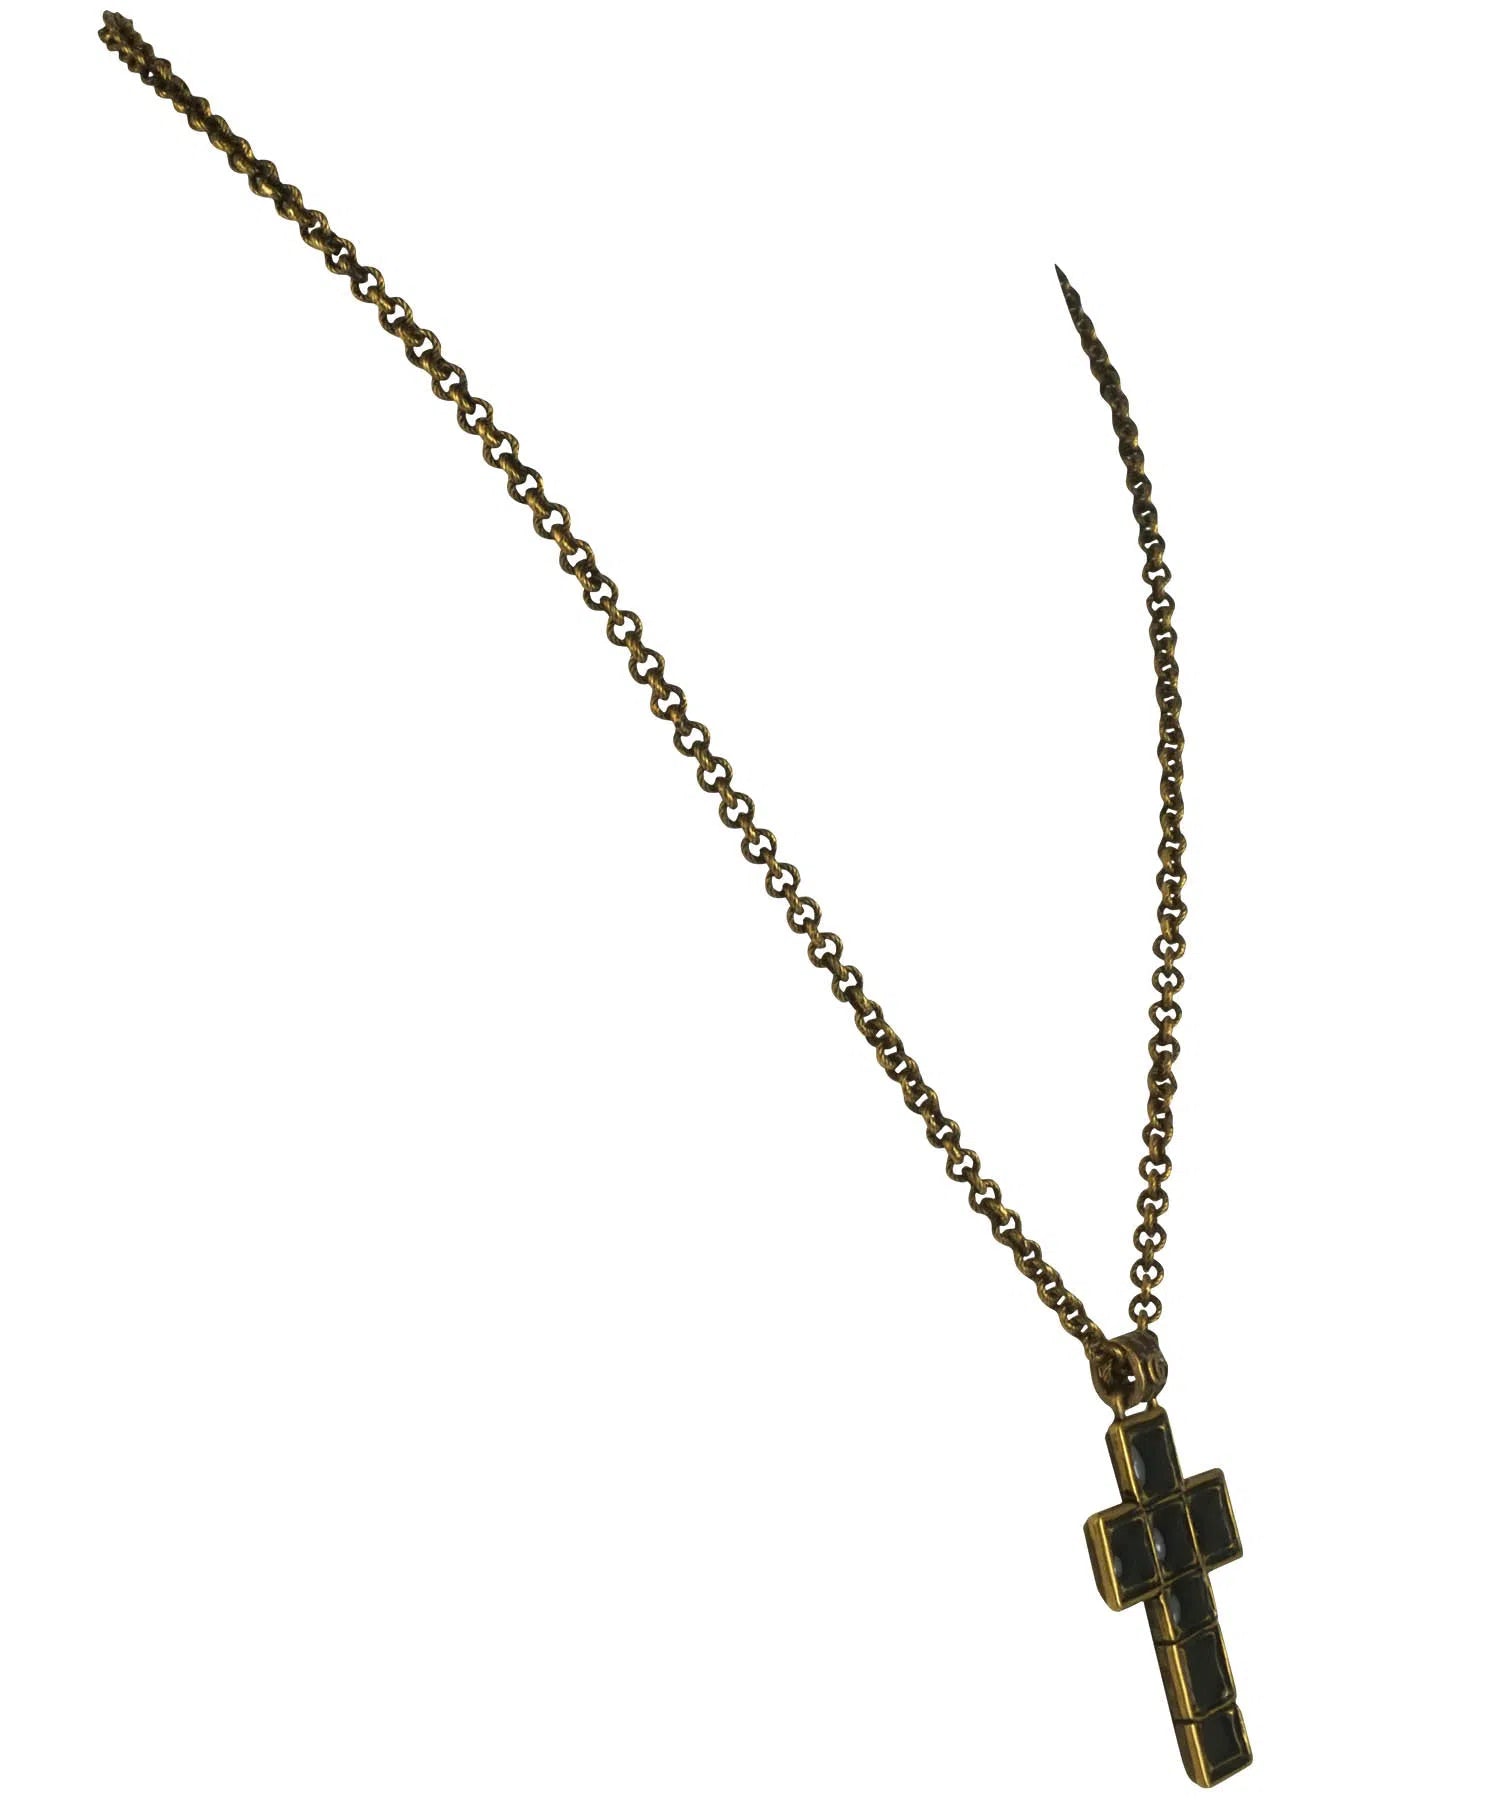 Gucci Small Glass Cross Pendant Necklace - Foxy Couture Carmel